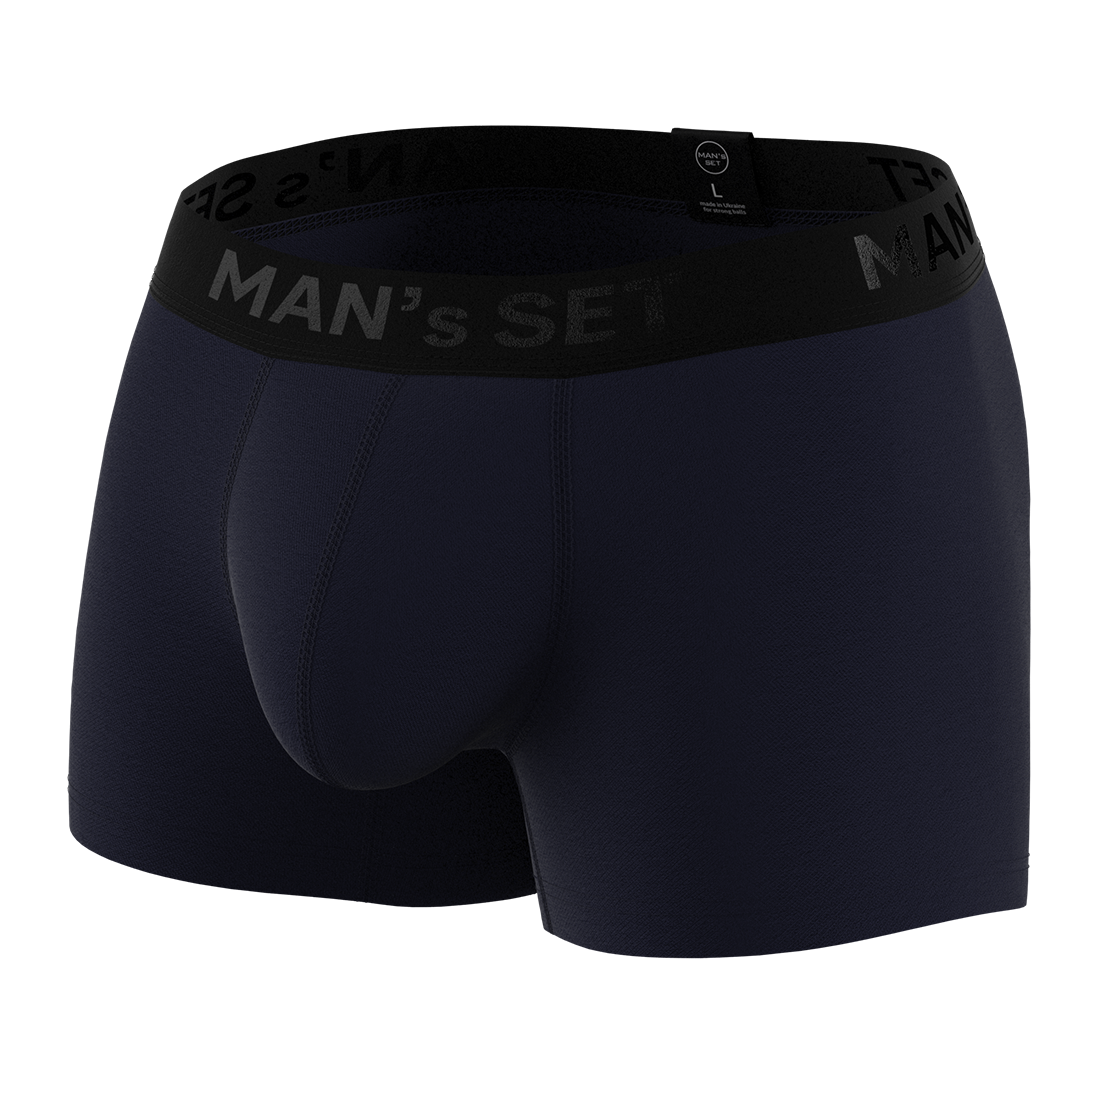 Мужские анатомические боксеры, Intimate 2.0 Black Series, темно-синий MansSet